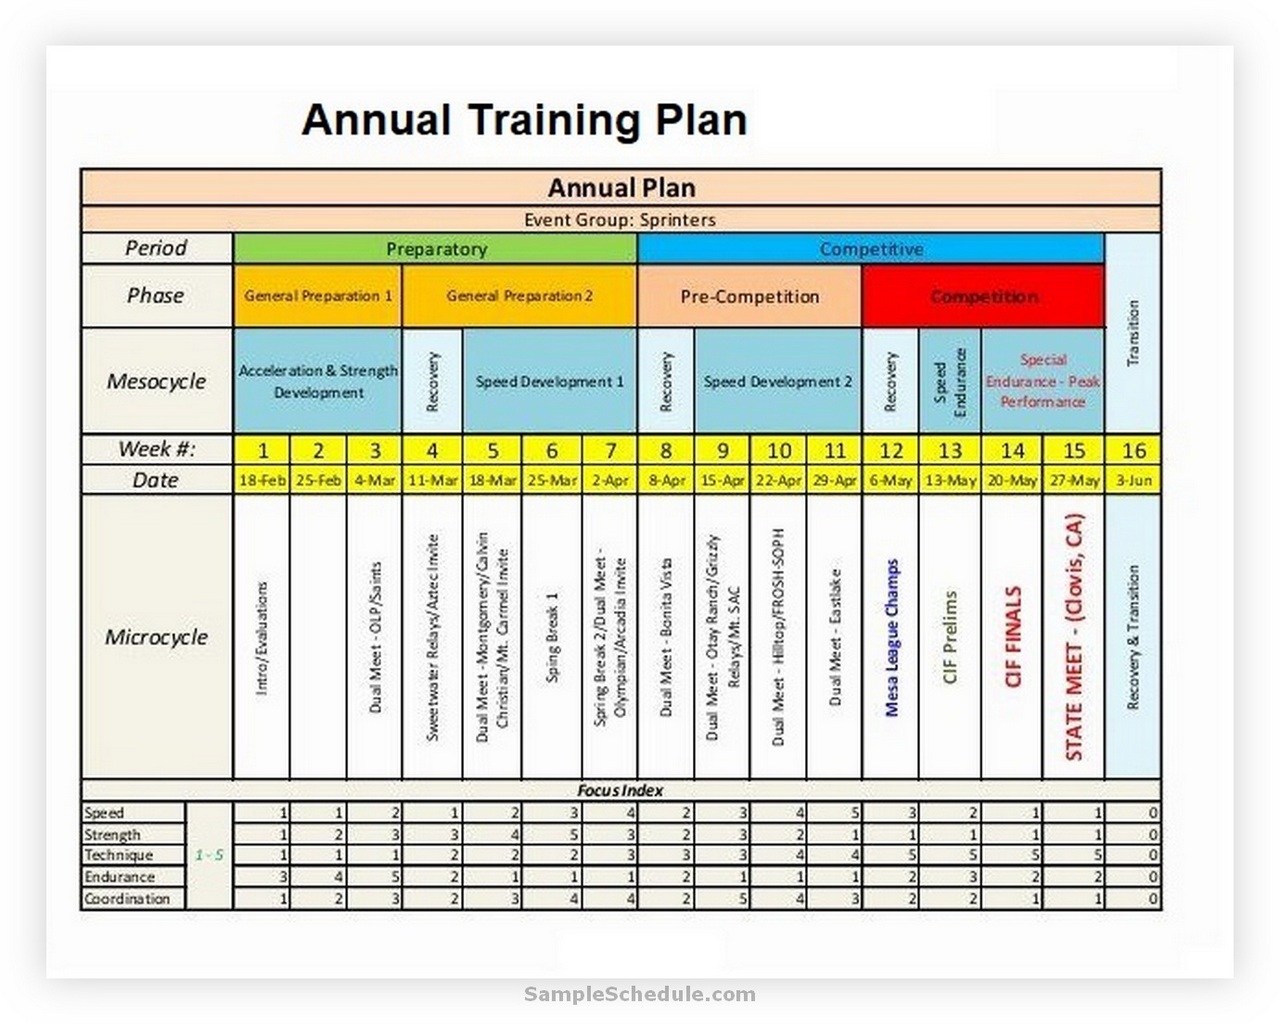 Annual Training Plan Template 01